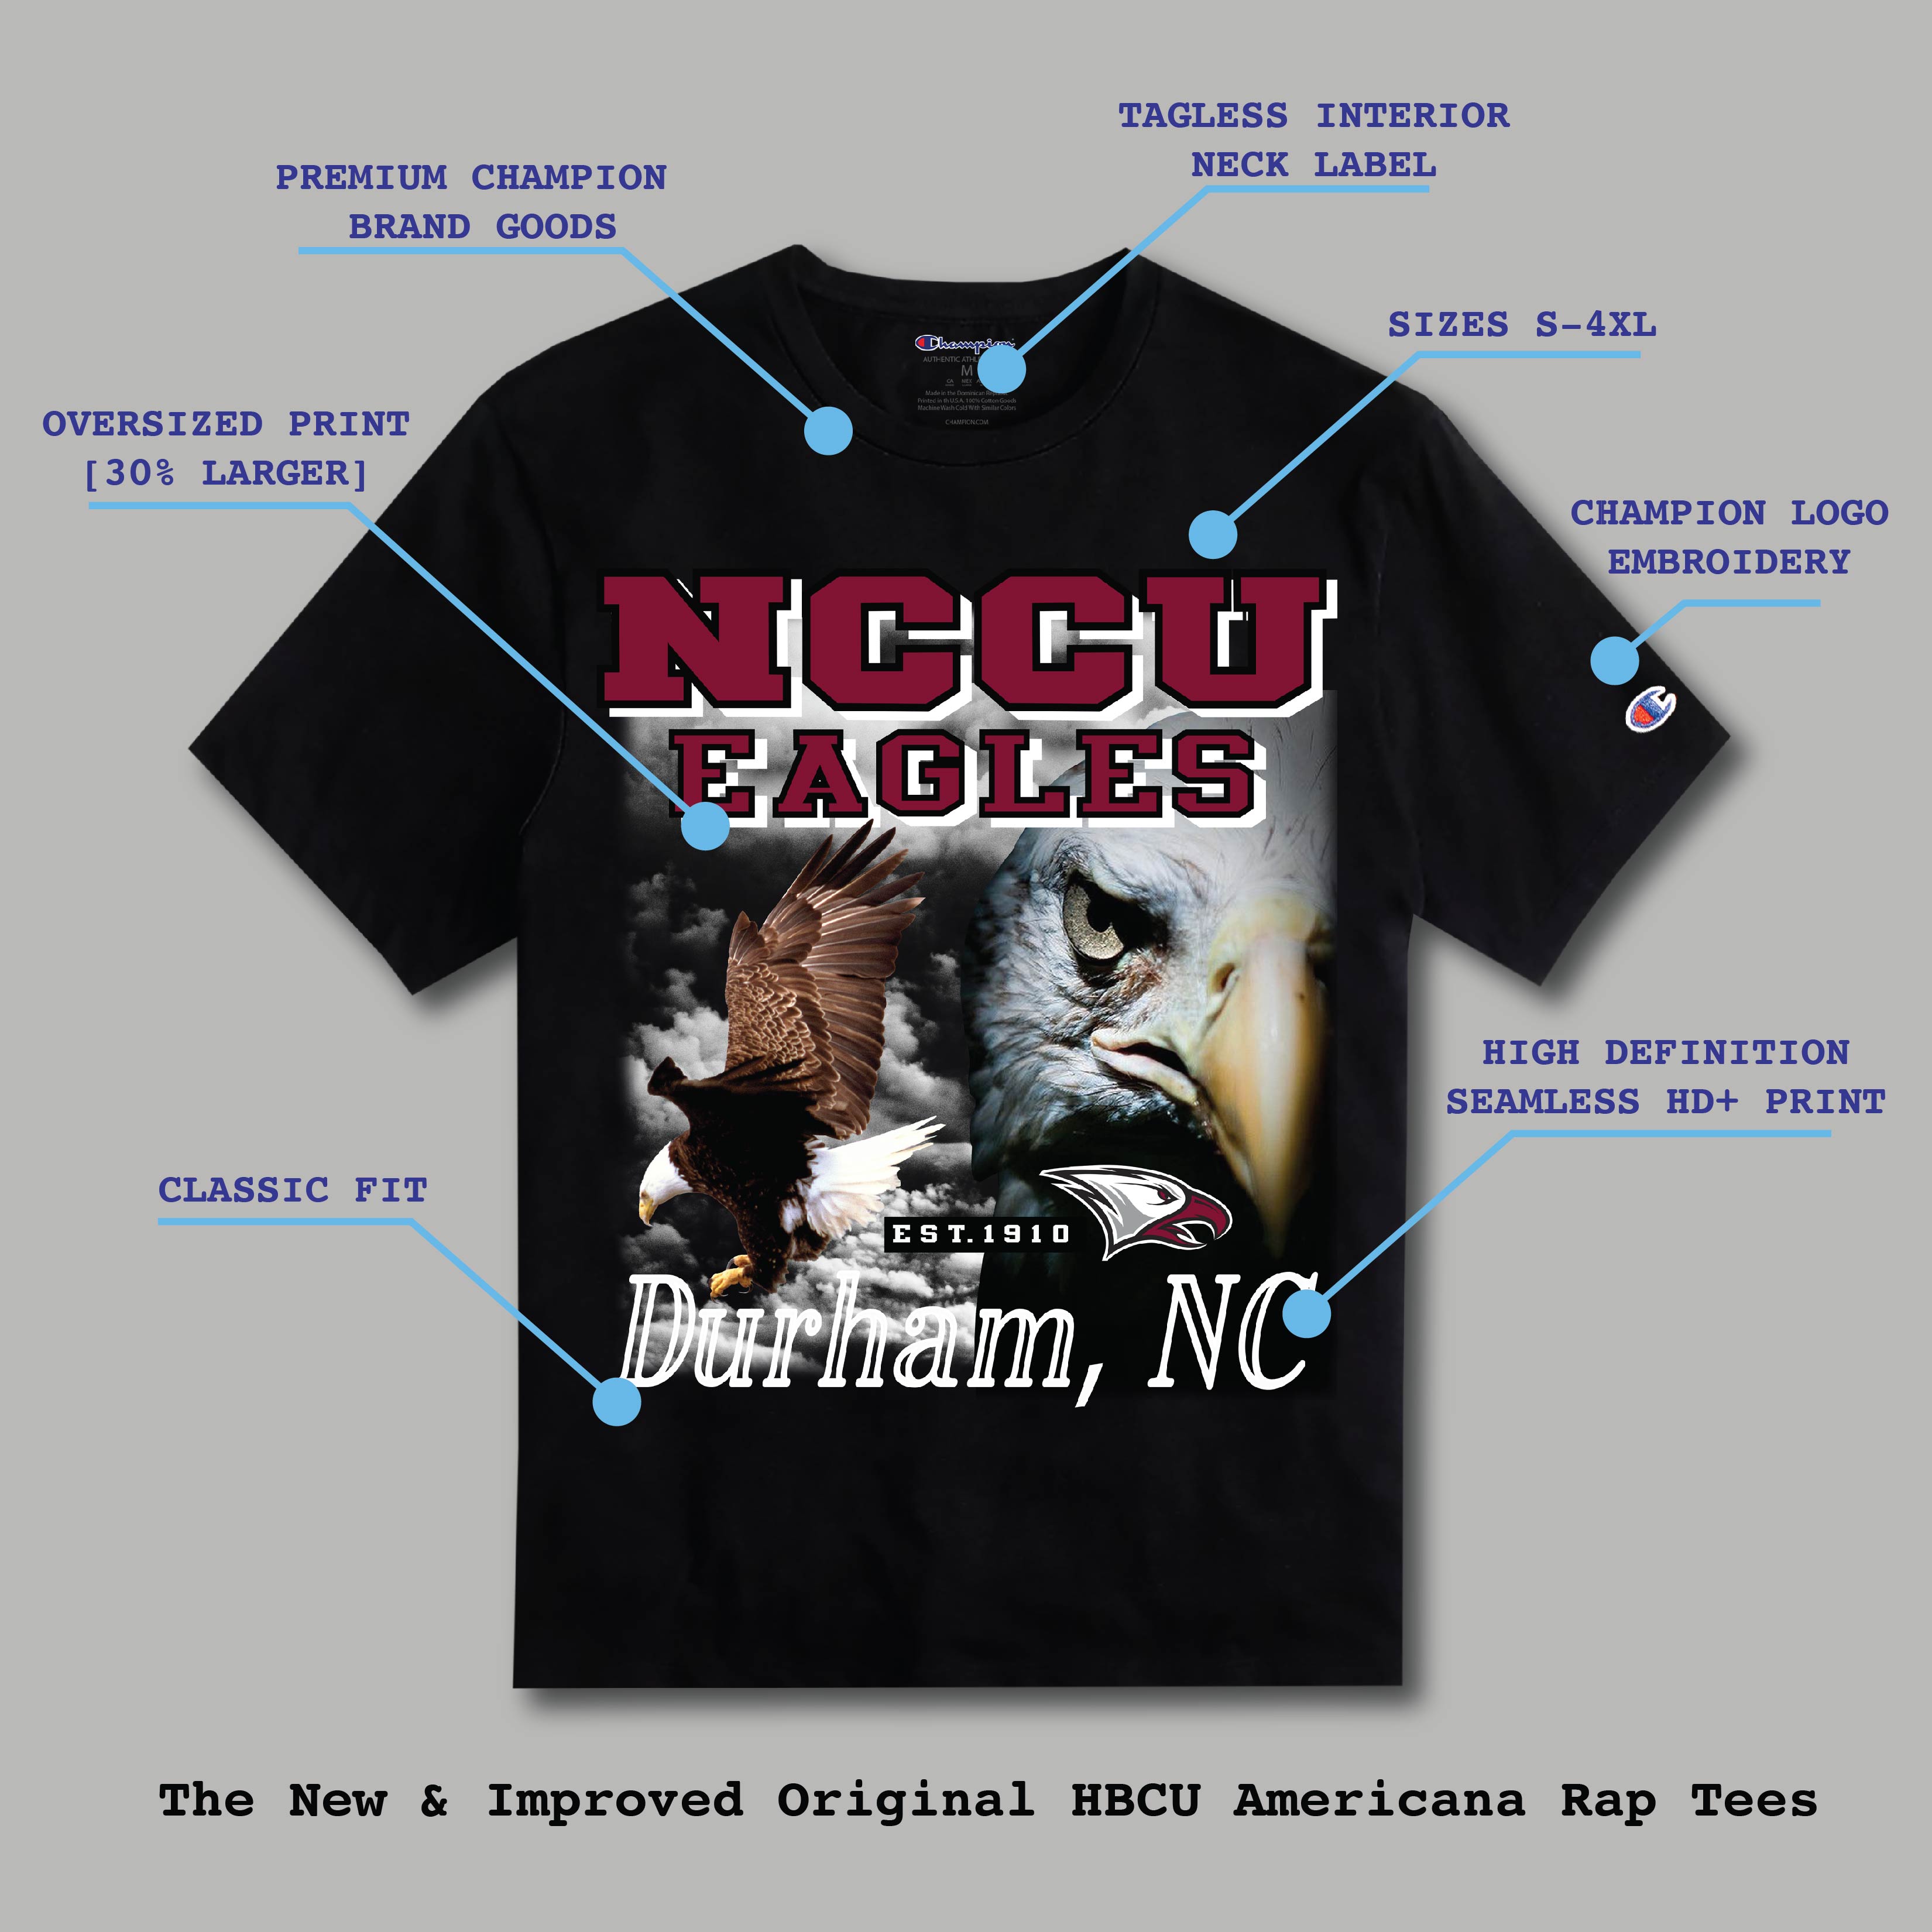  City of Champions T-Shirt for North Carolina College